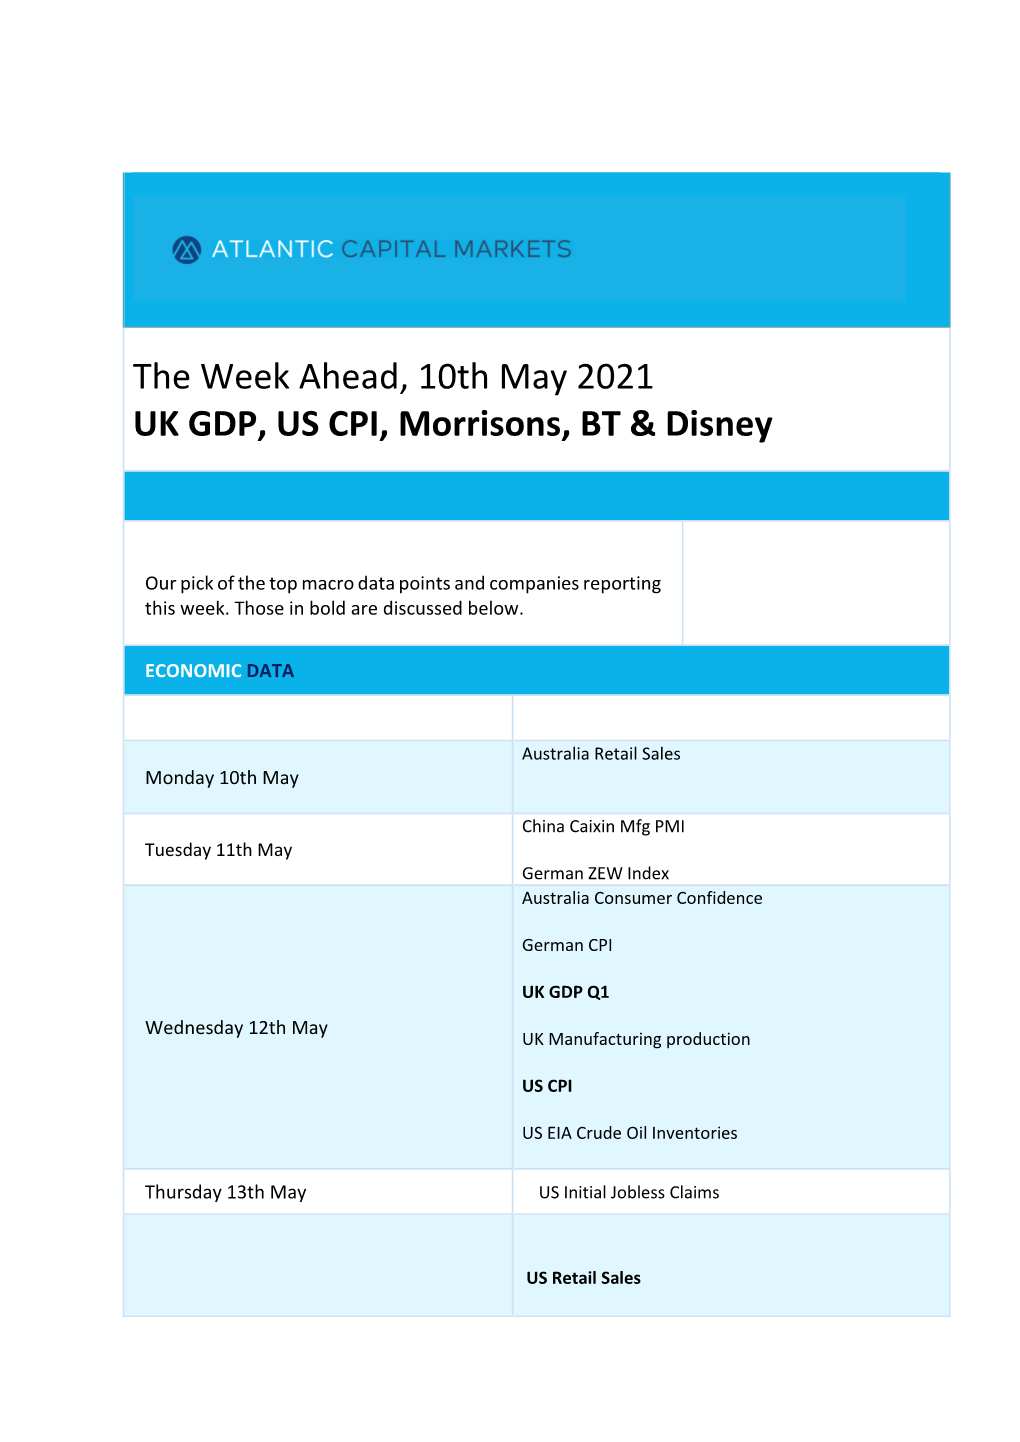 The Week Ahead, 10Th May 2021 UK GDP, US CPI, Morrisons, BT & Disney